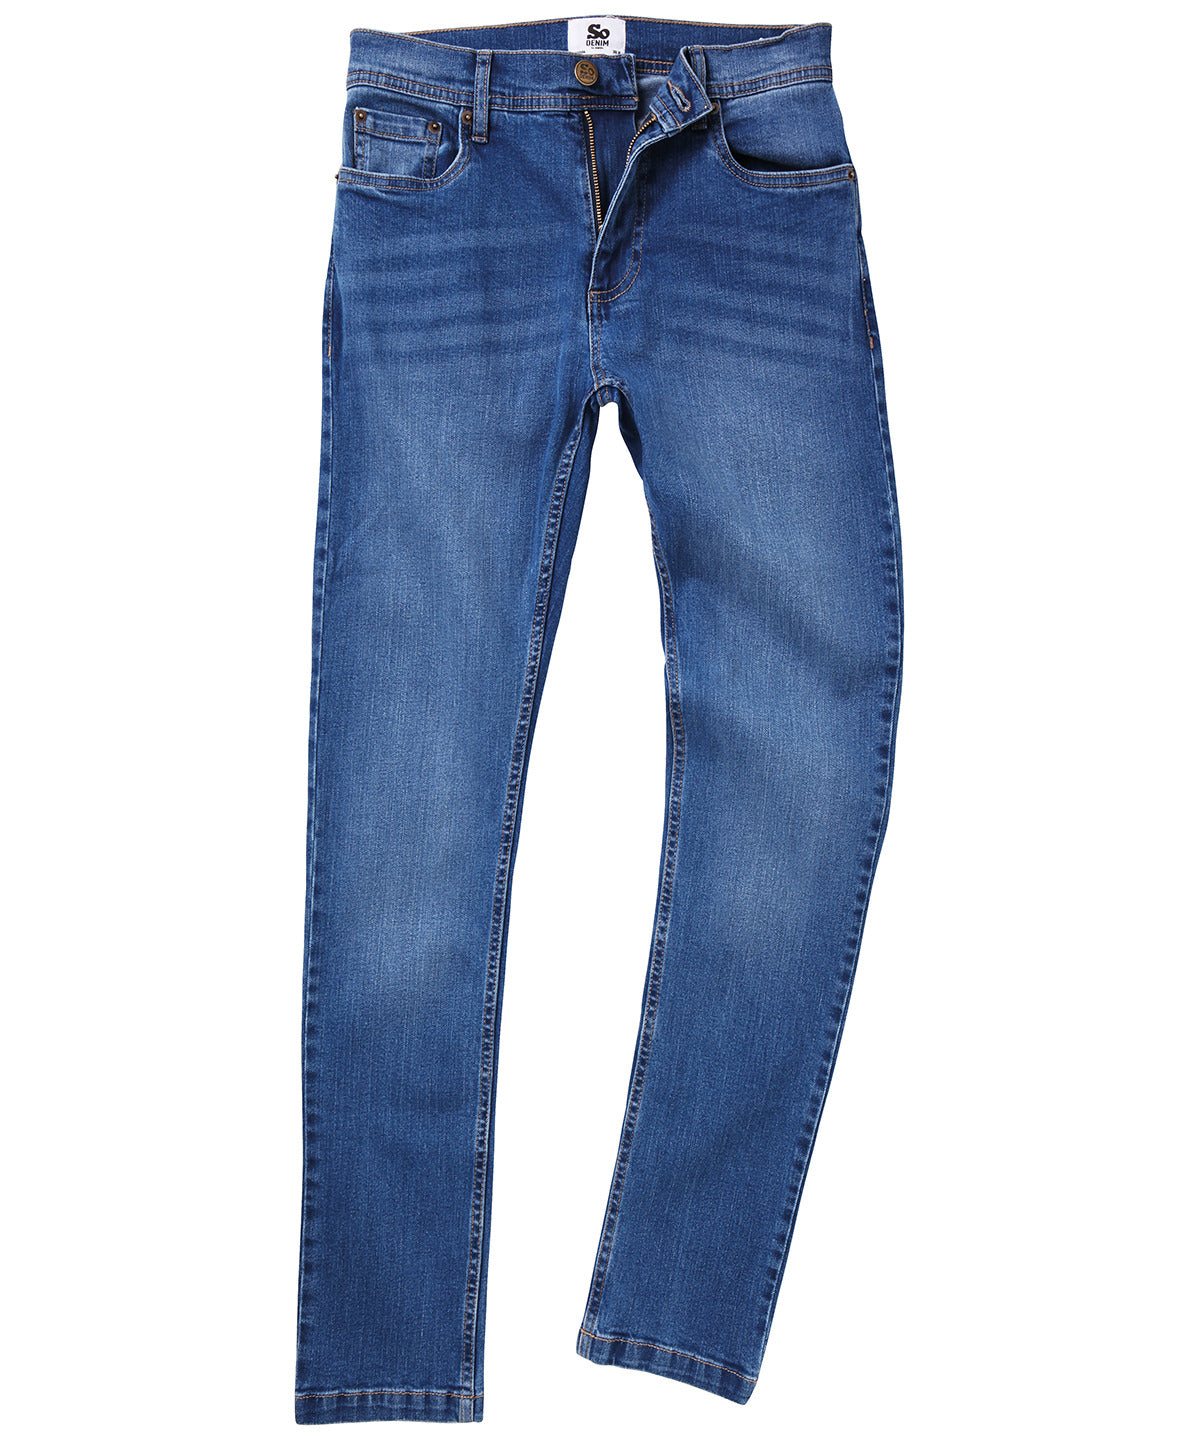 Personalised Trousers - Black AWDis So Denim Max slim jeans